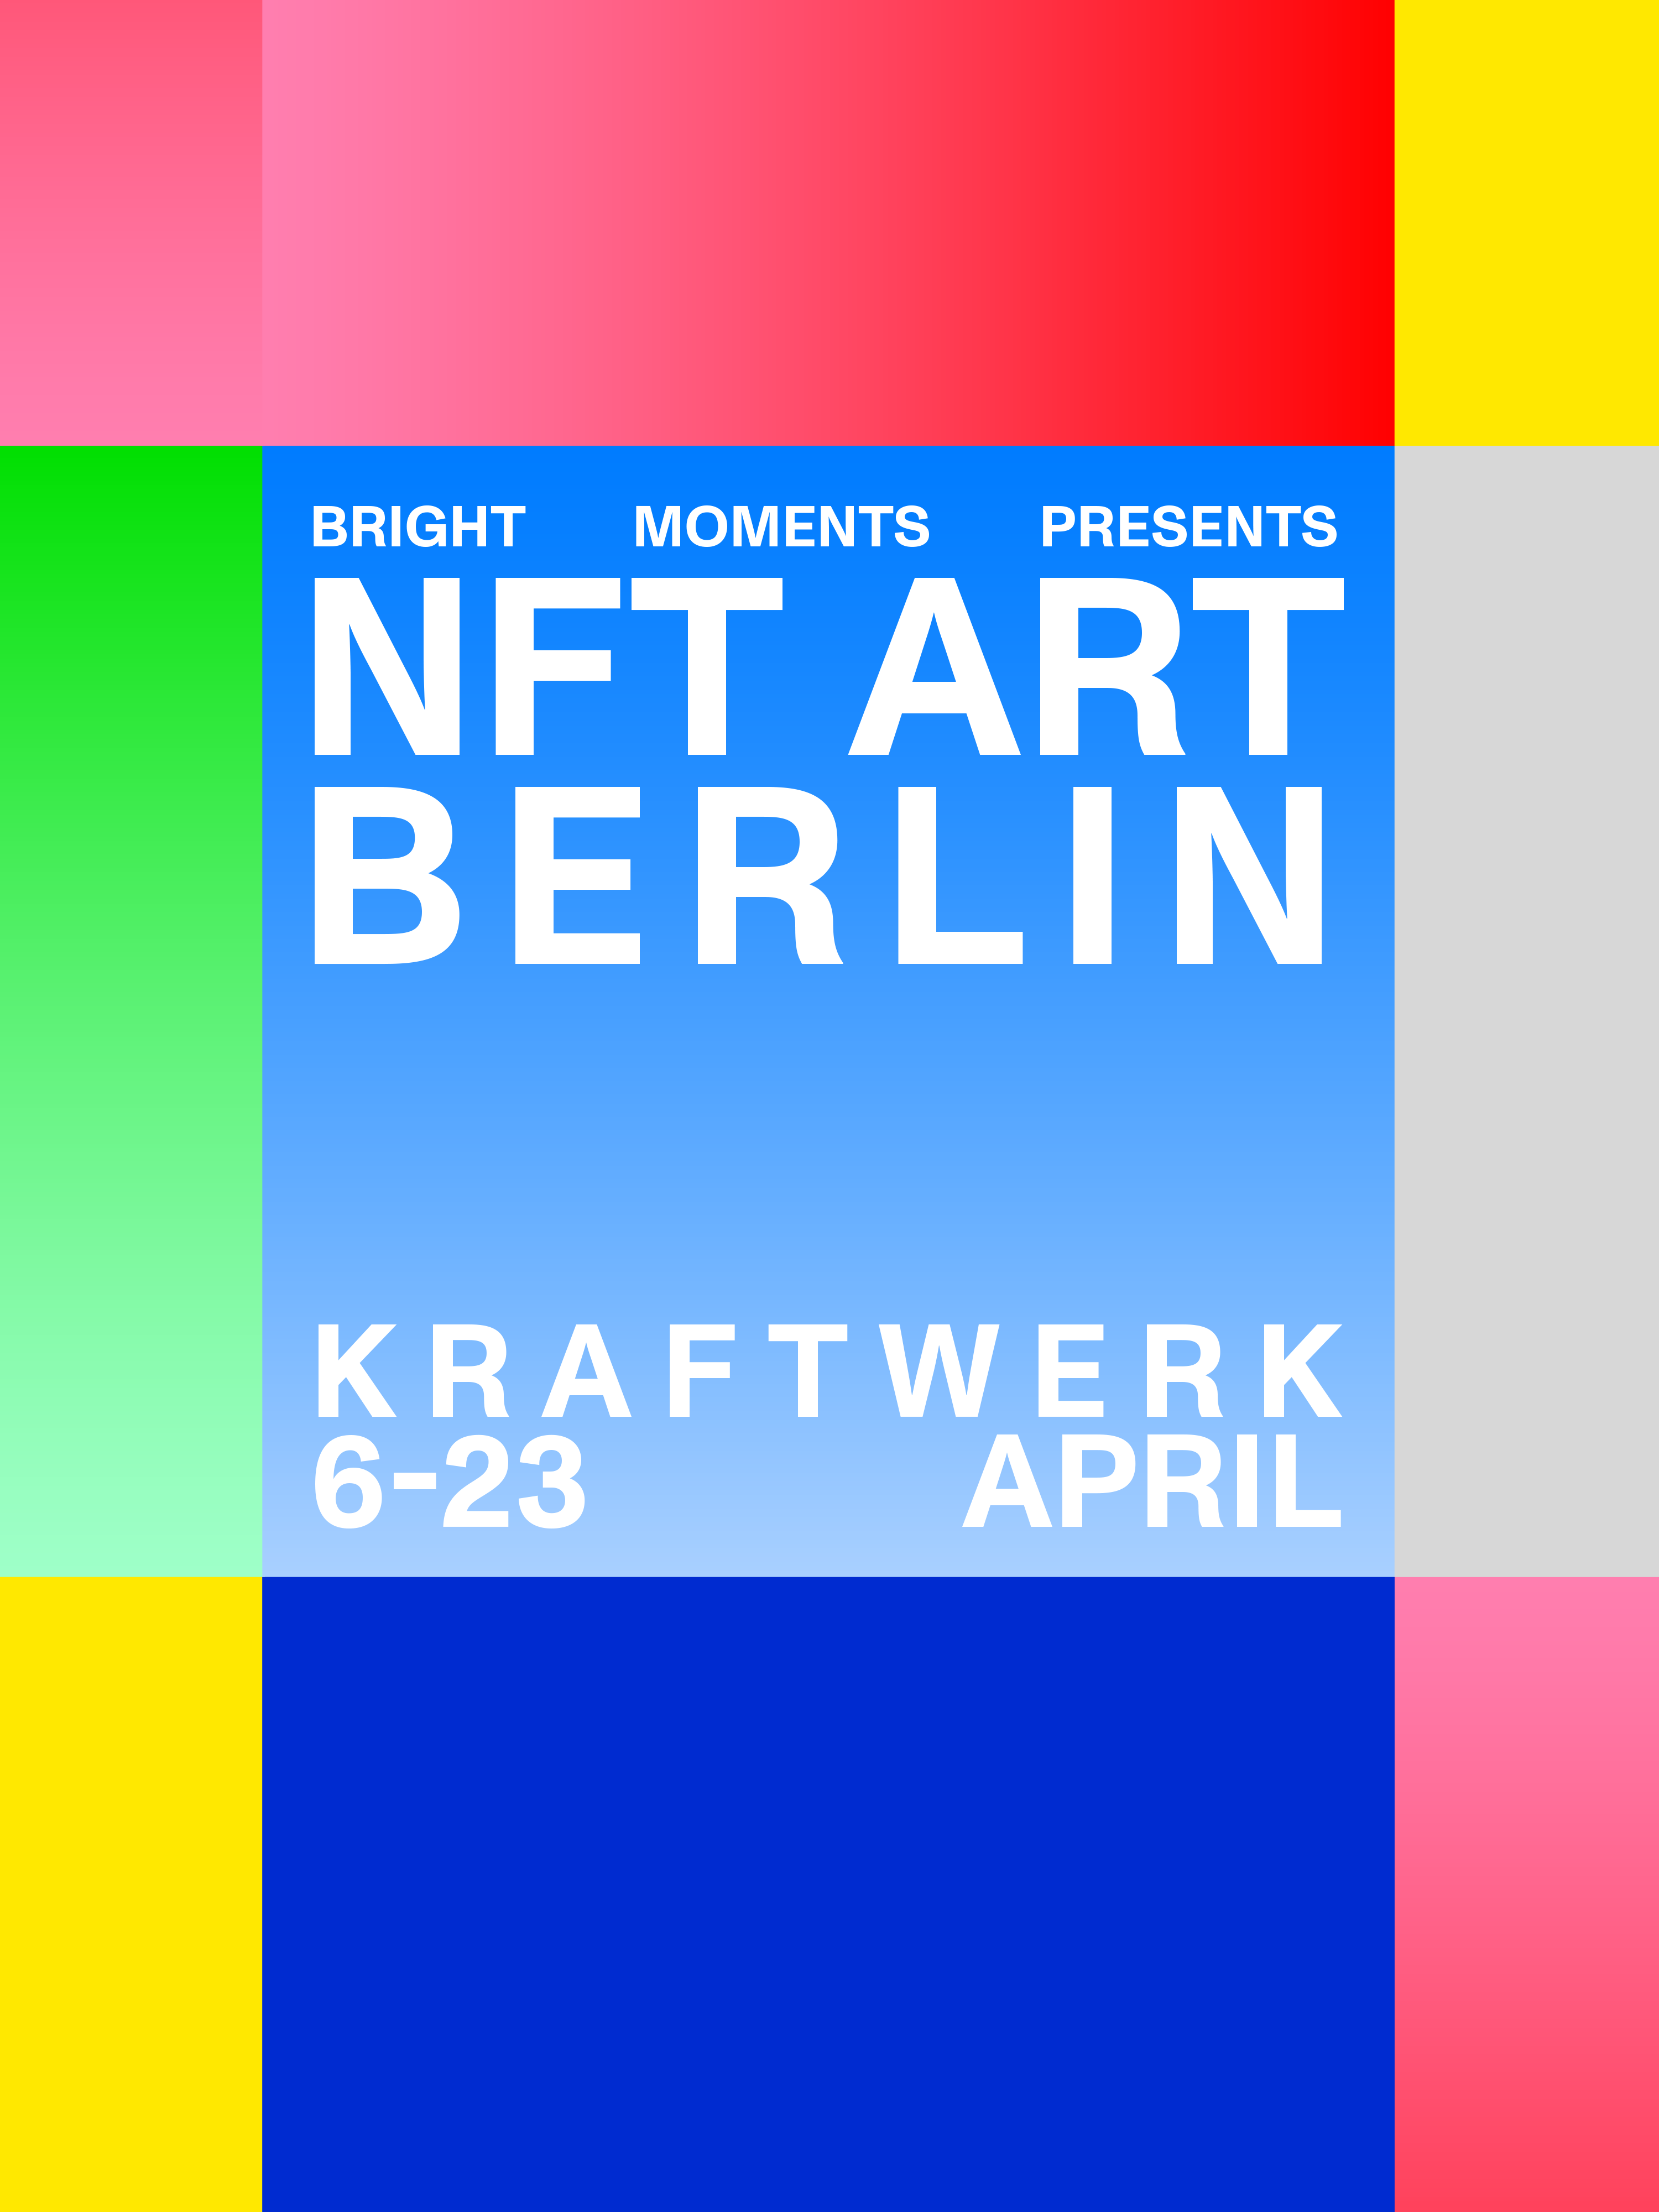 NFT Art Berlin: Bright Moments @ Kraftwerk April 6-23